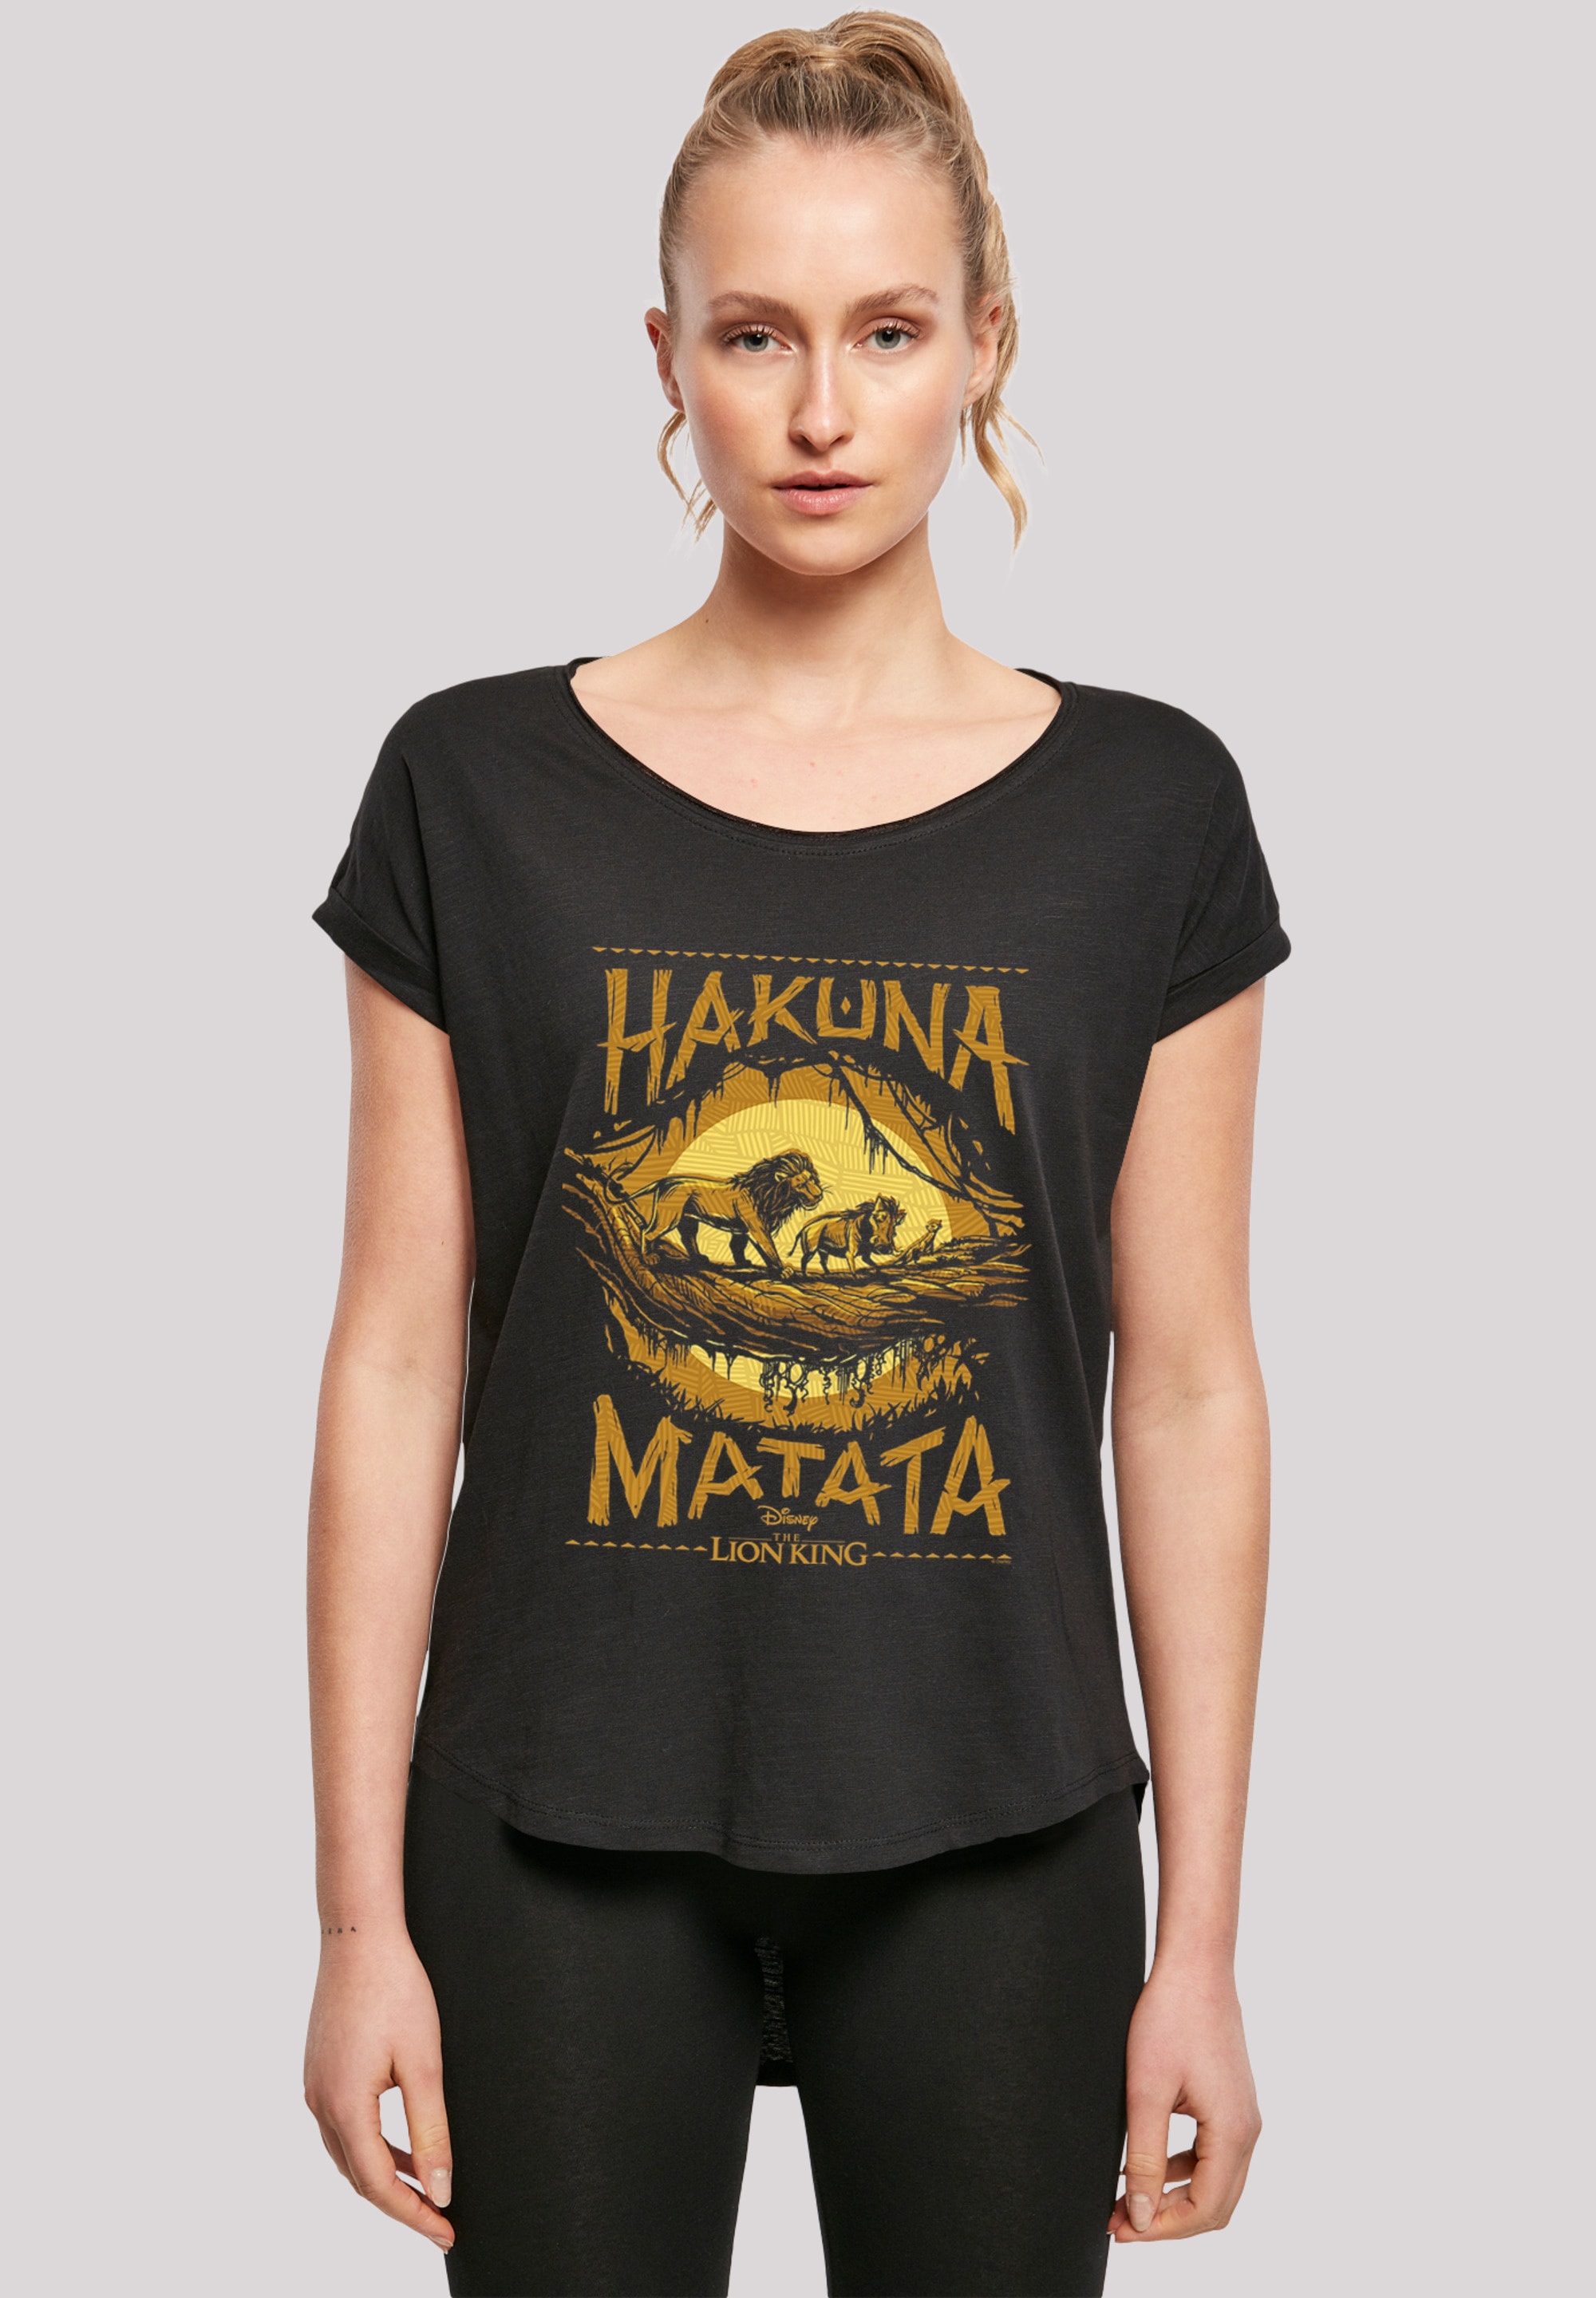 | Hakuna »König Löwen de Print kaufen der T-Shirt imwalking. Matata«, F4NT4STIC